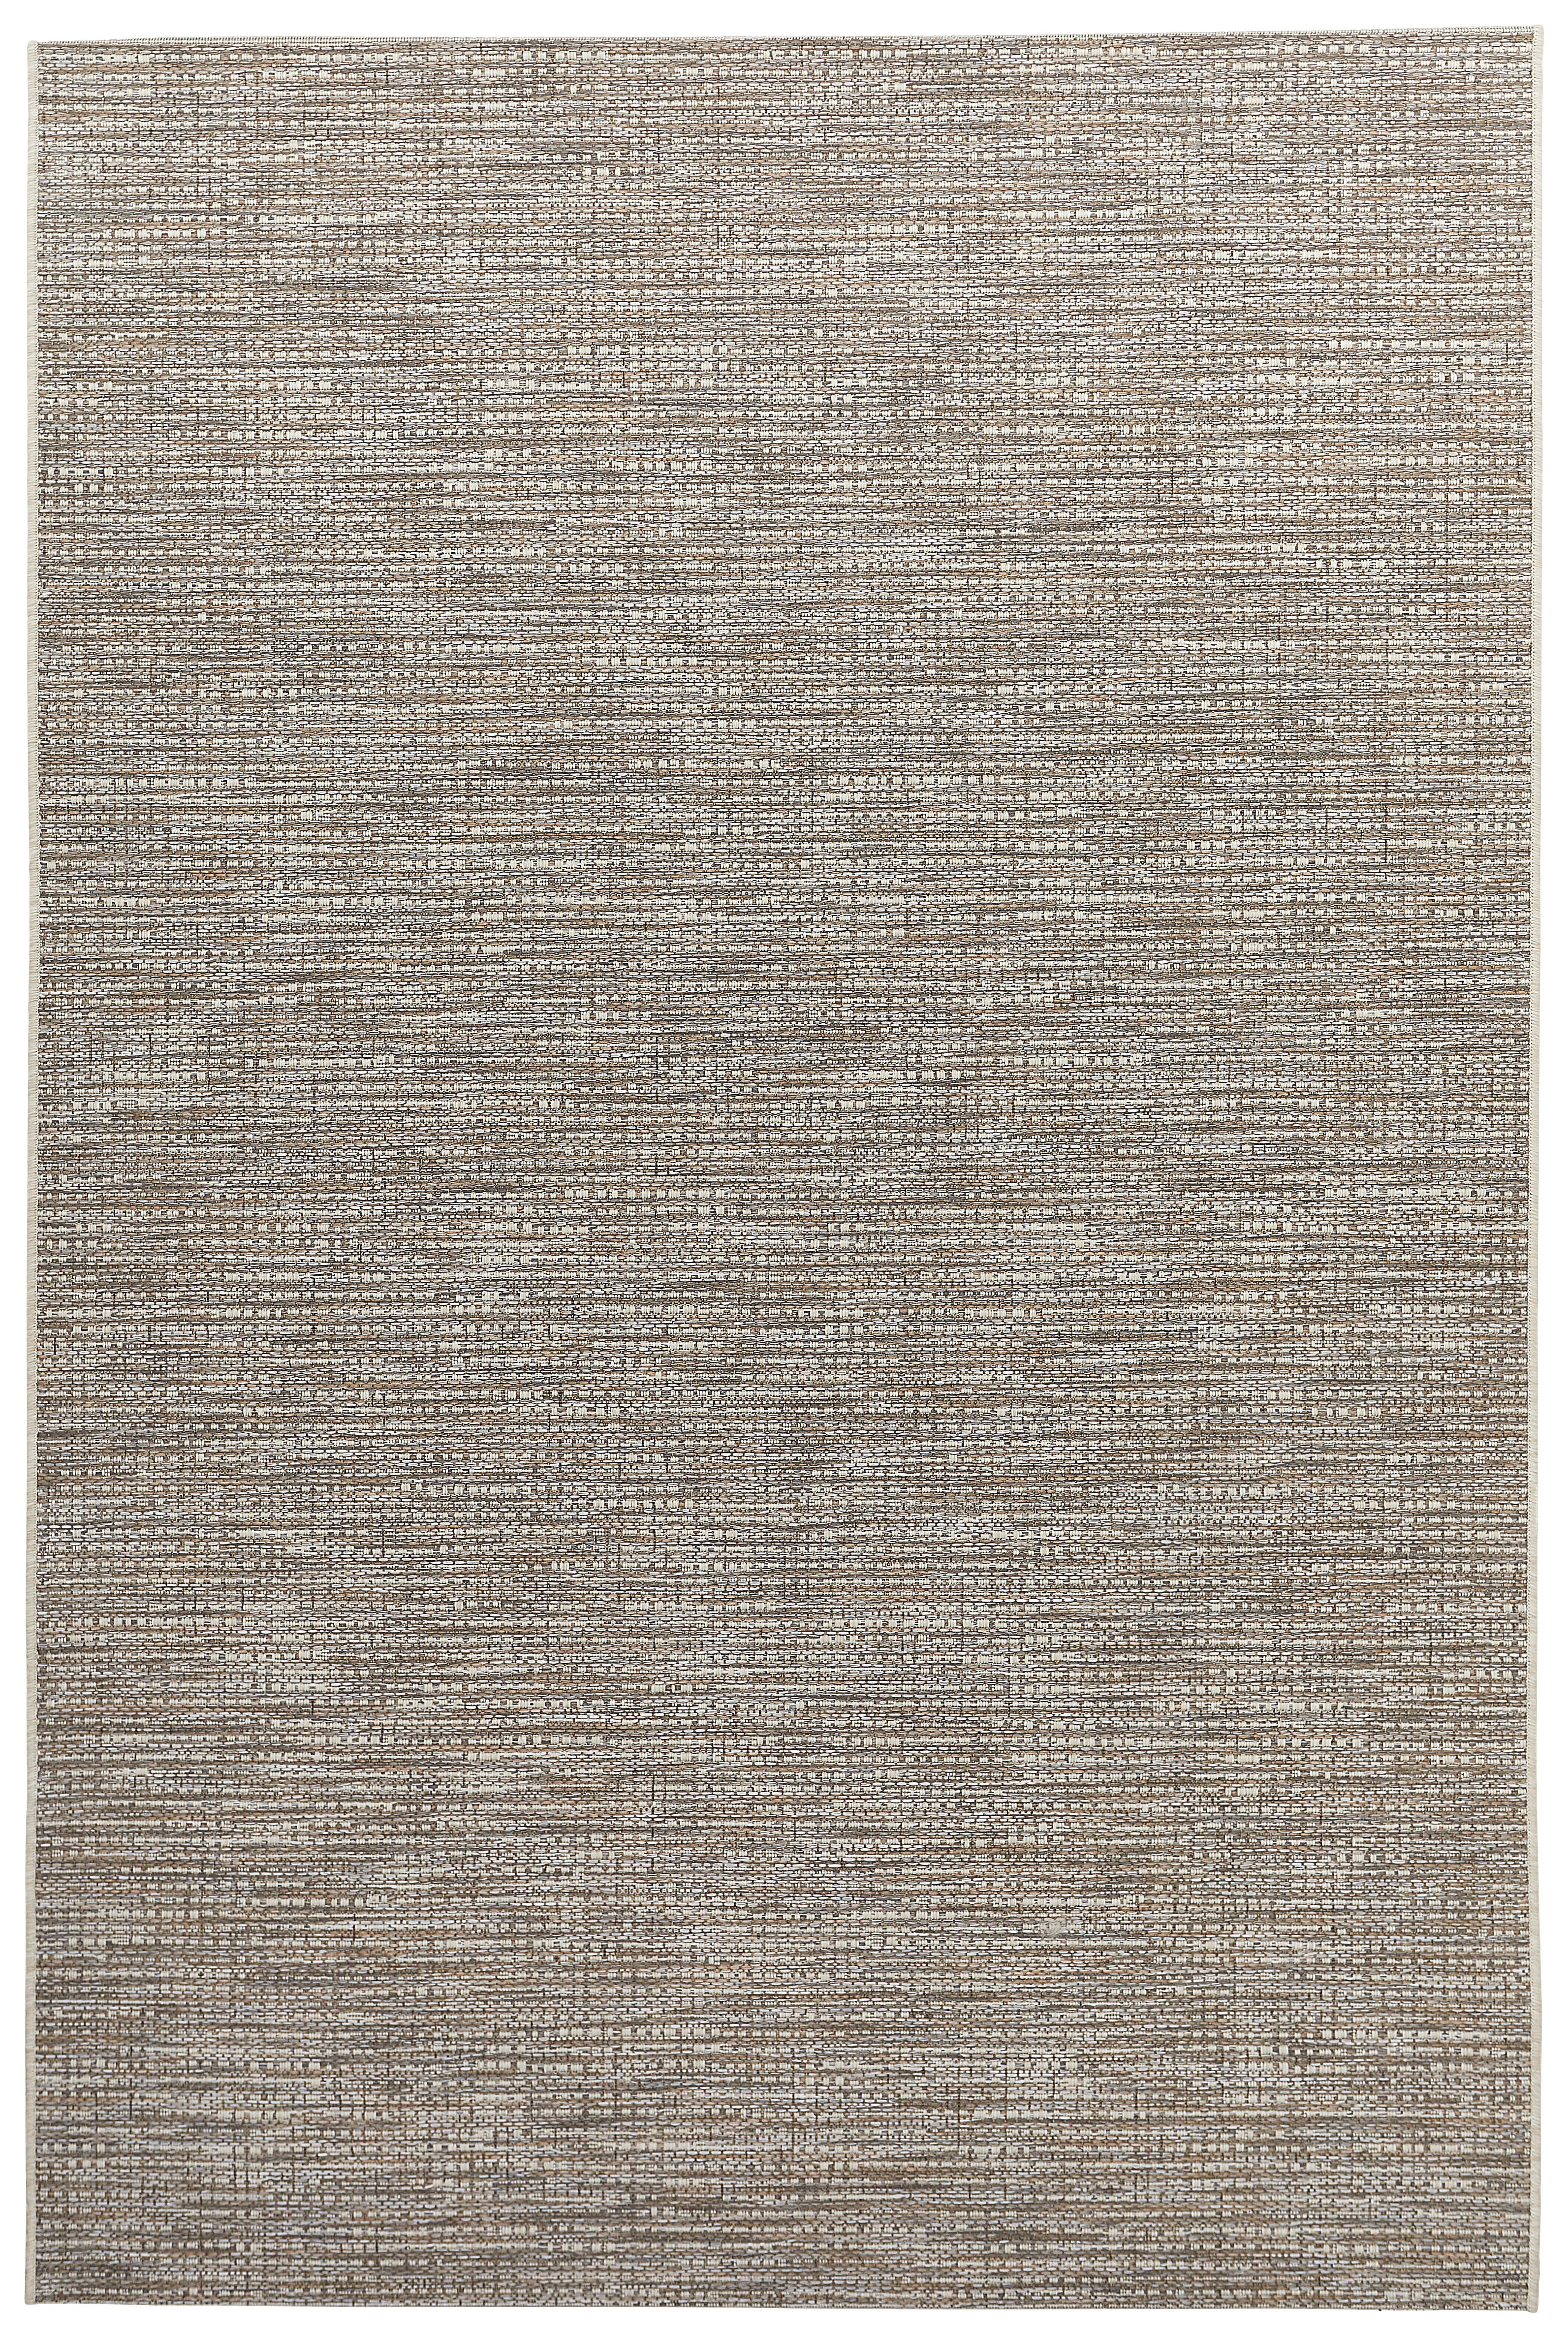 FLACHWEBETEPPICH 120/170 cm  - Grau, Design, Textil (120/170cm) - Novel